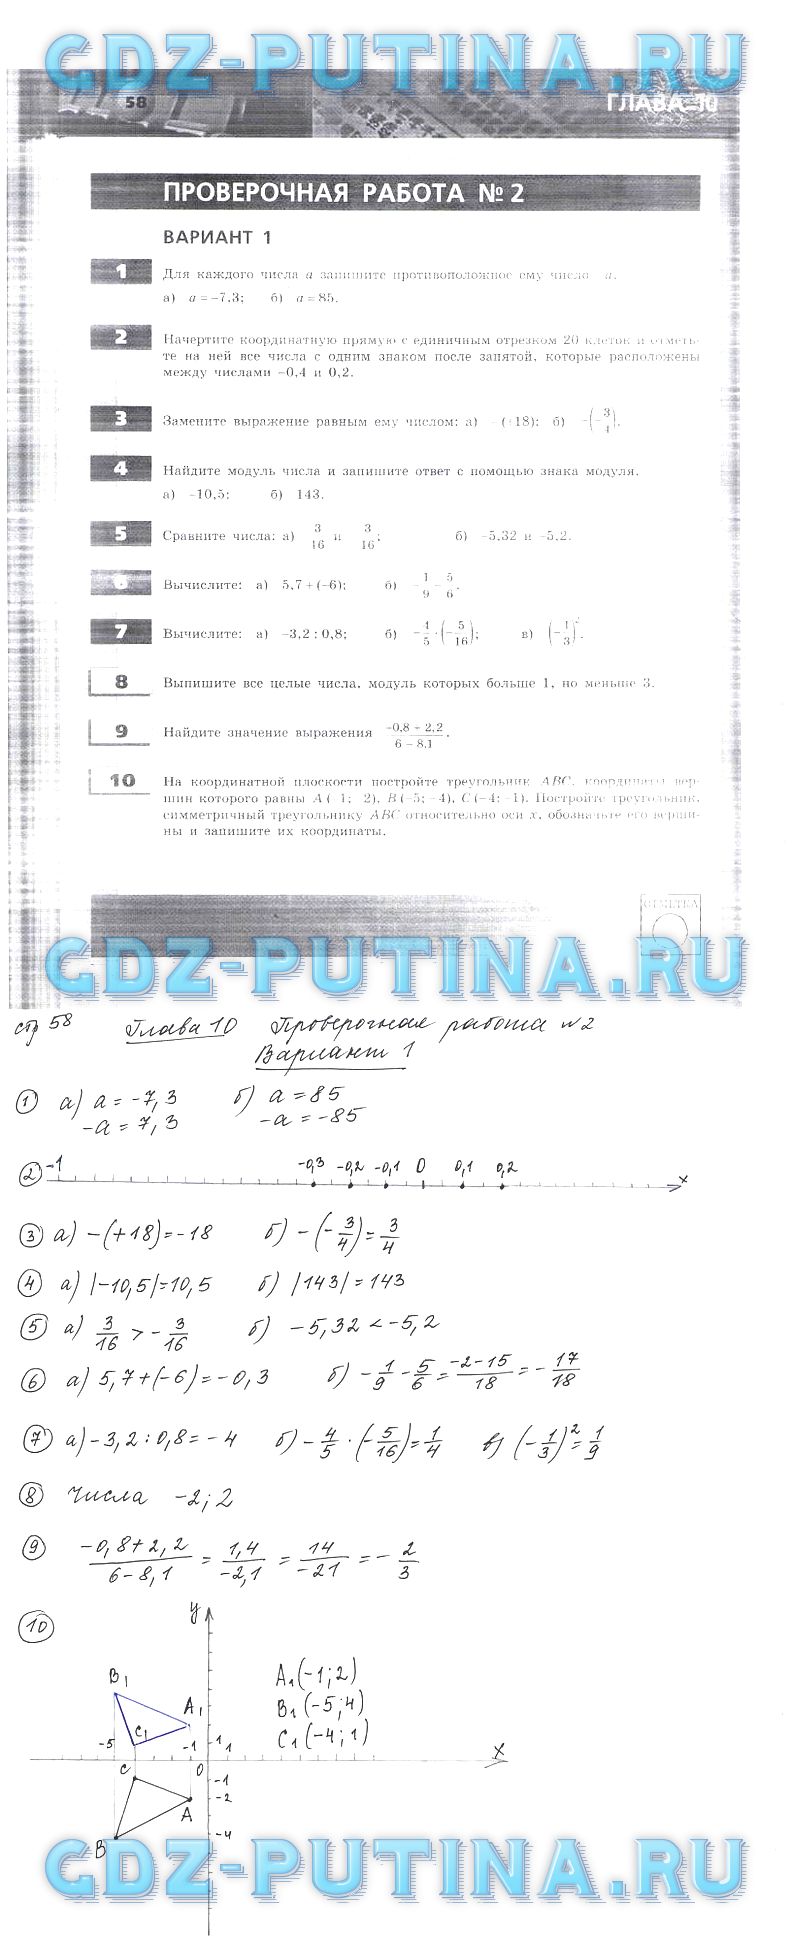 гдз 6 класс тетрадь-экзаменатор страница 58 математика Кузнецова